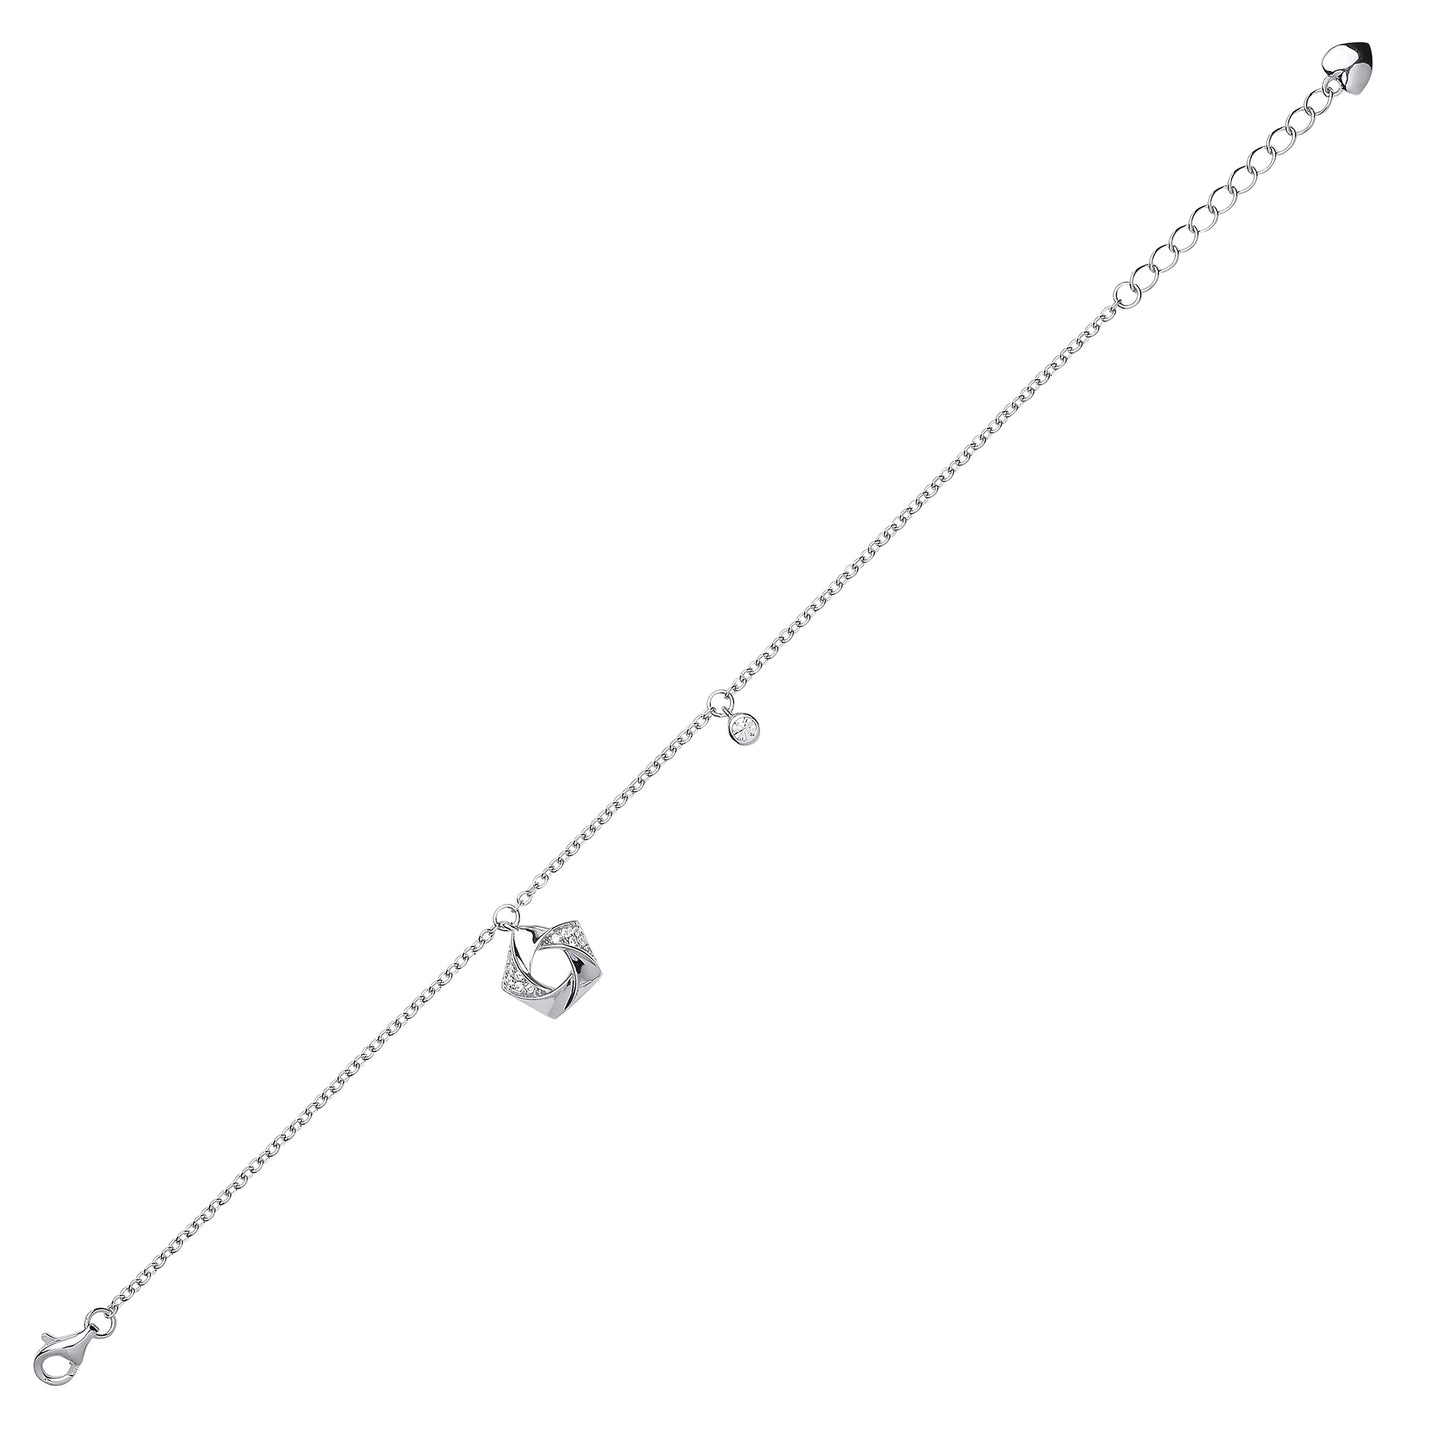 Silver  CZ Swirling Pentagon Flower Charm Bracelet 6.5 inch - GVB430